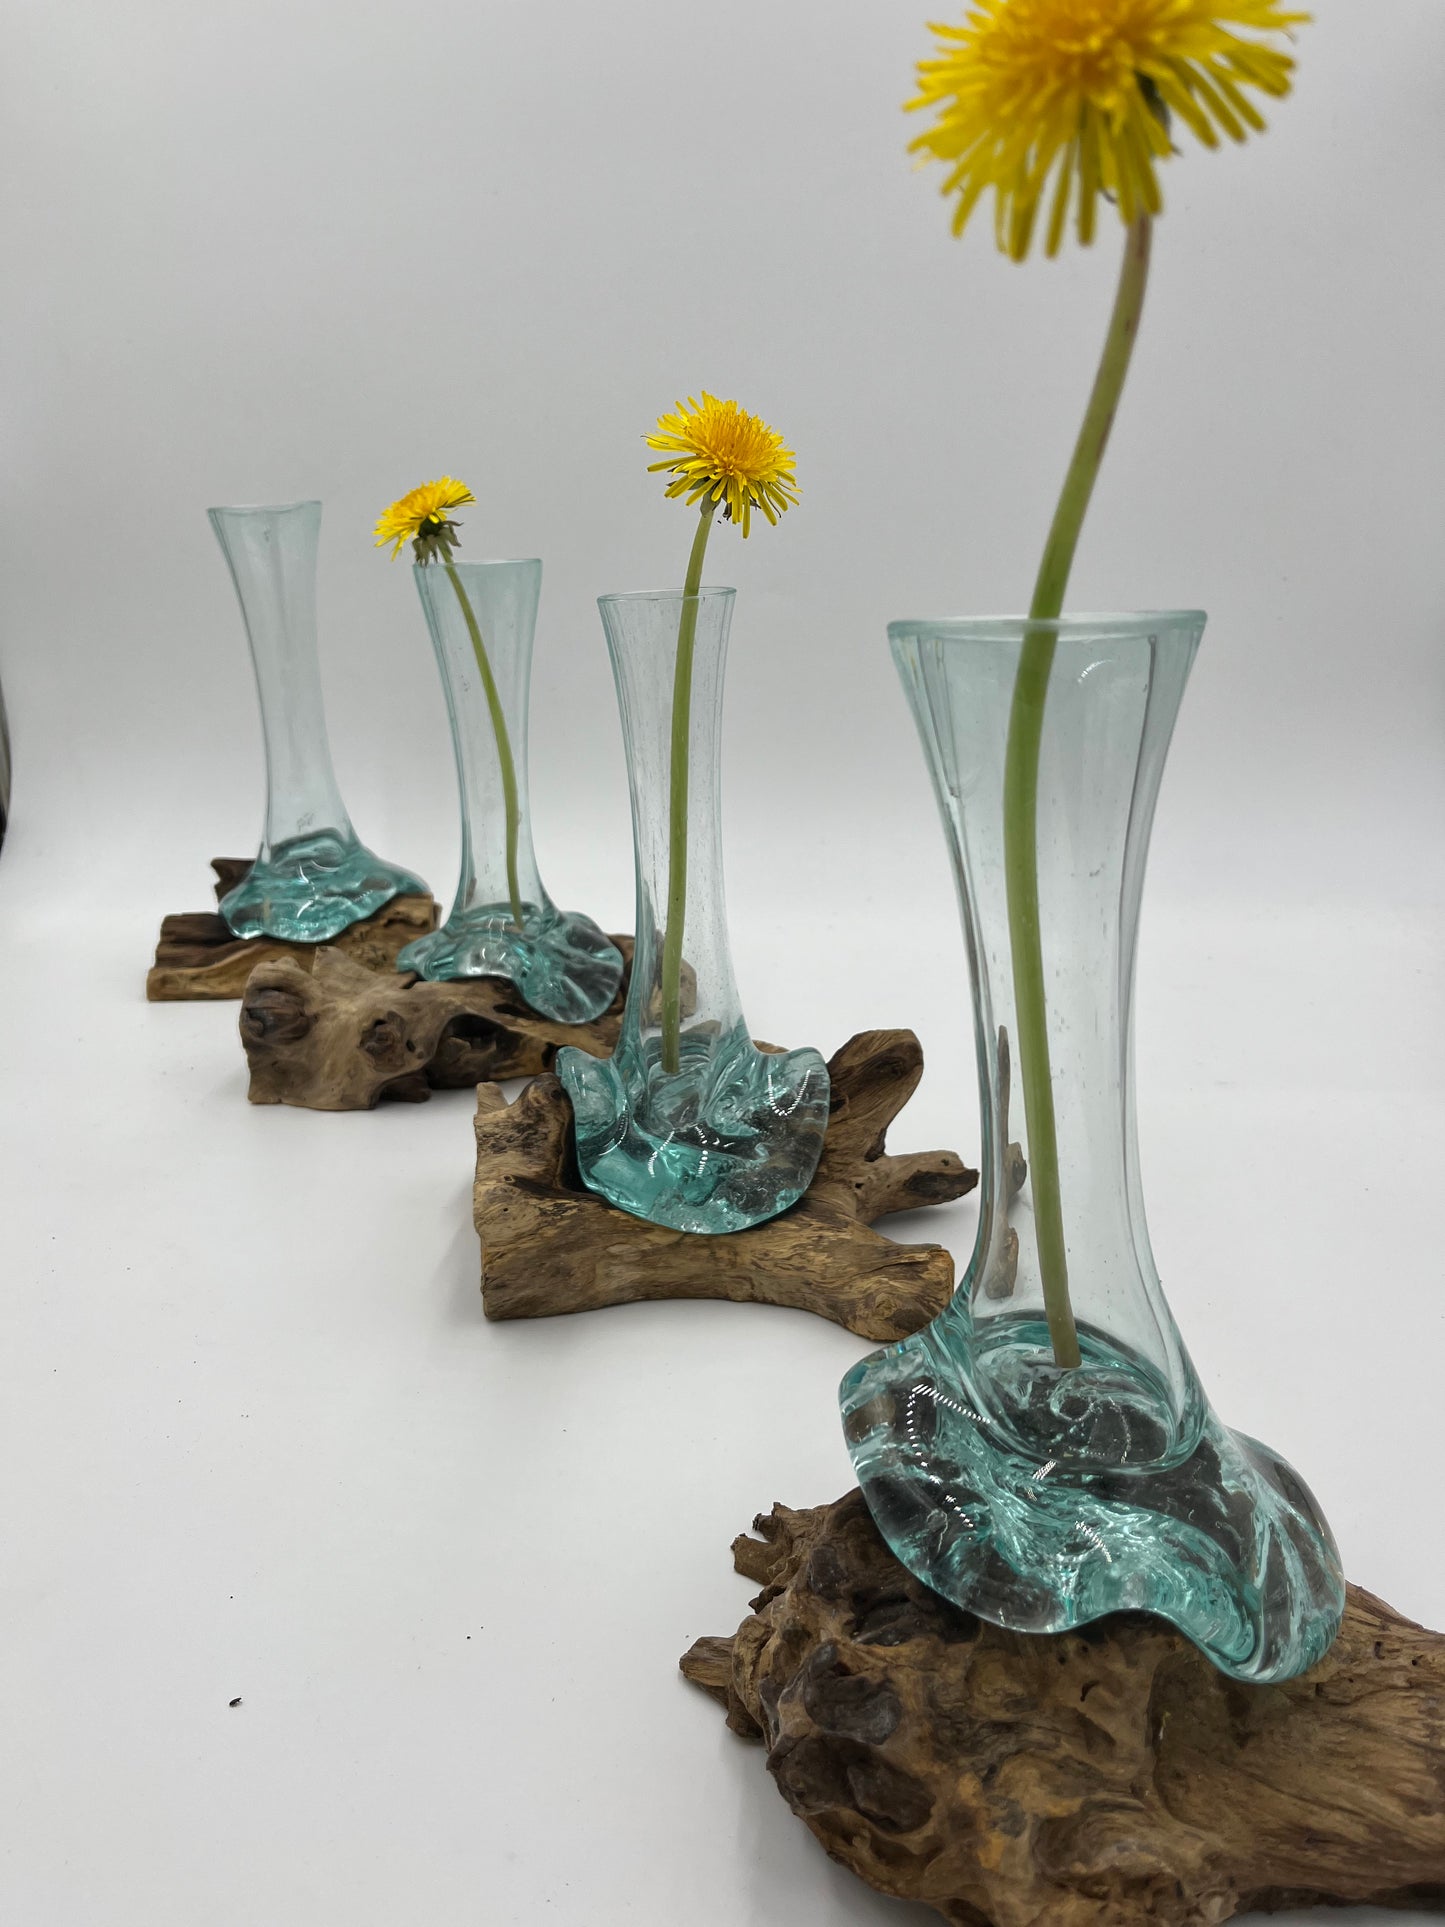 Molten Glass Vase (20cm)